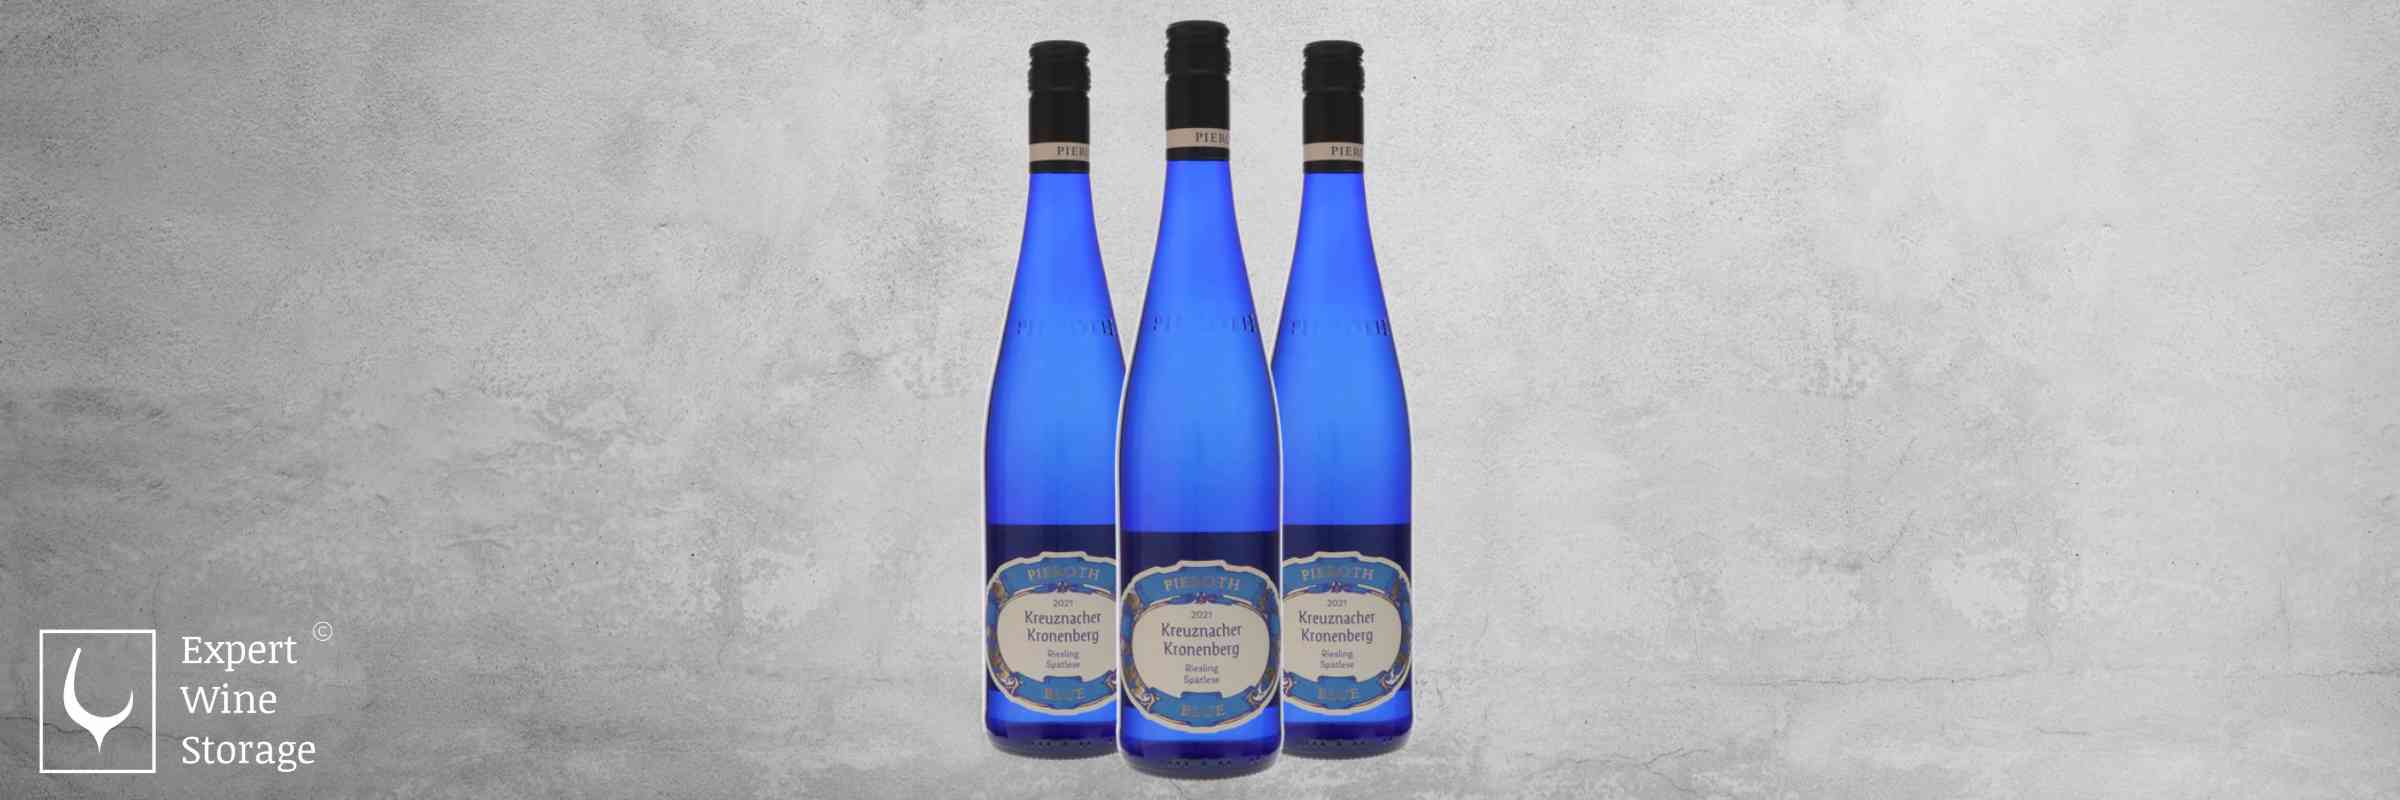 Pieroth Blue Wine Bottles